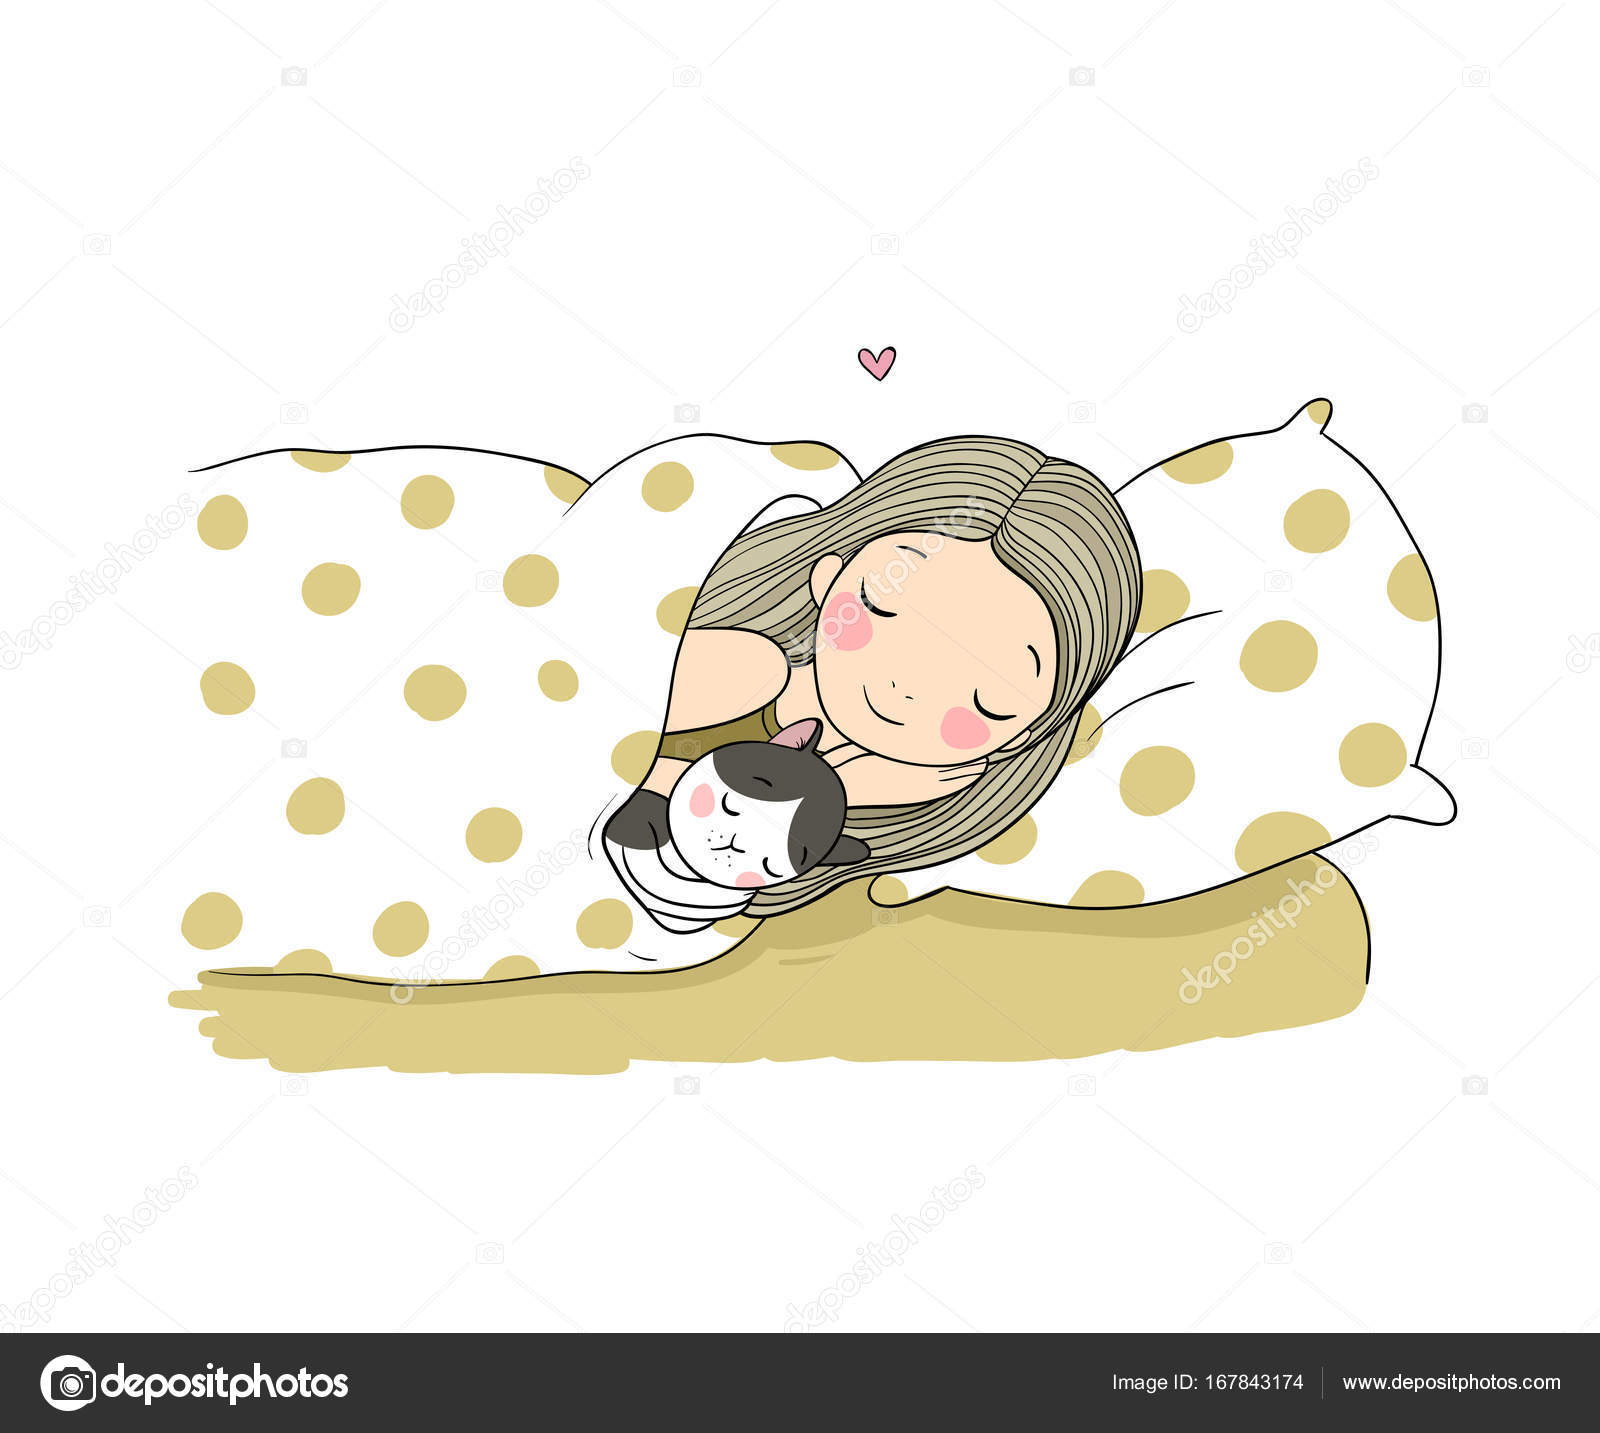 depositphotos_167843174-stock-illustration-sleeping-girl-and-cat-in.jpg